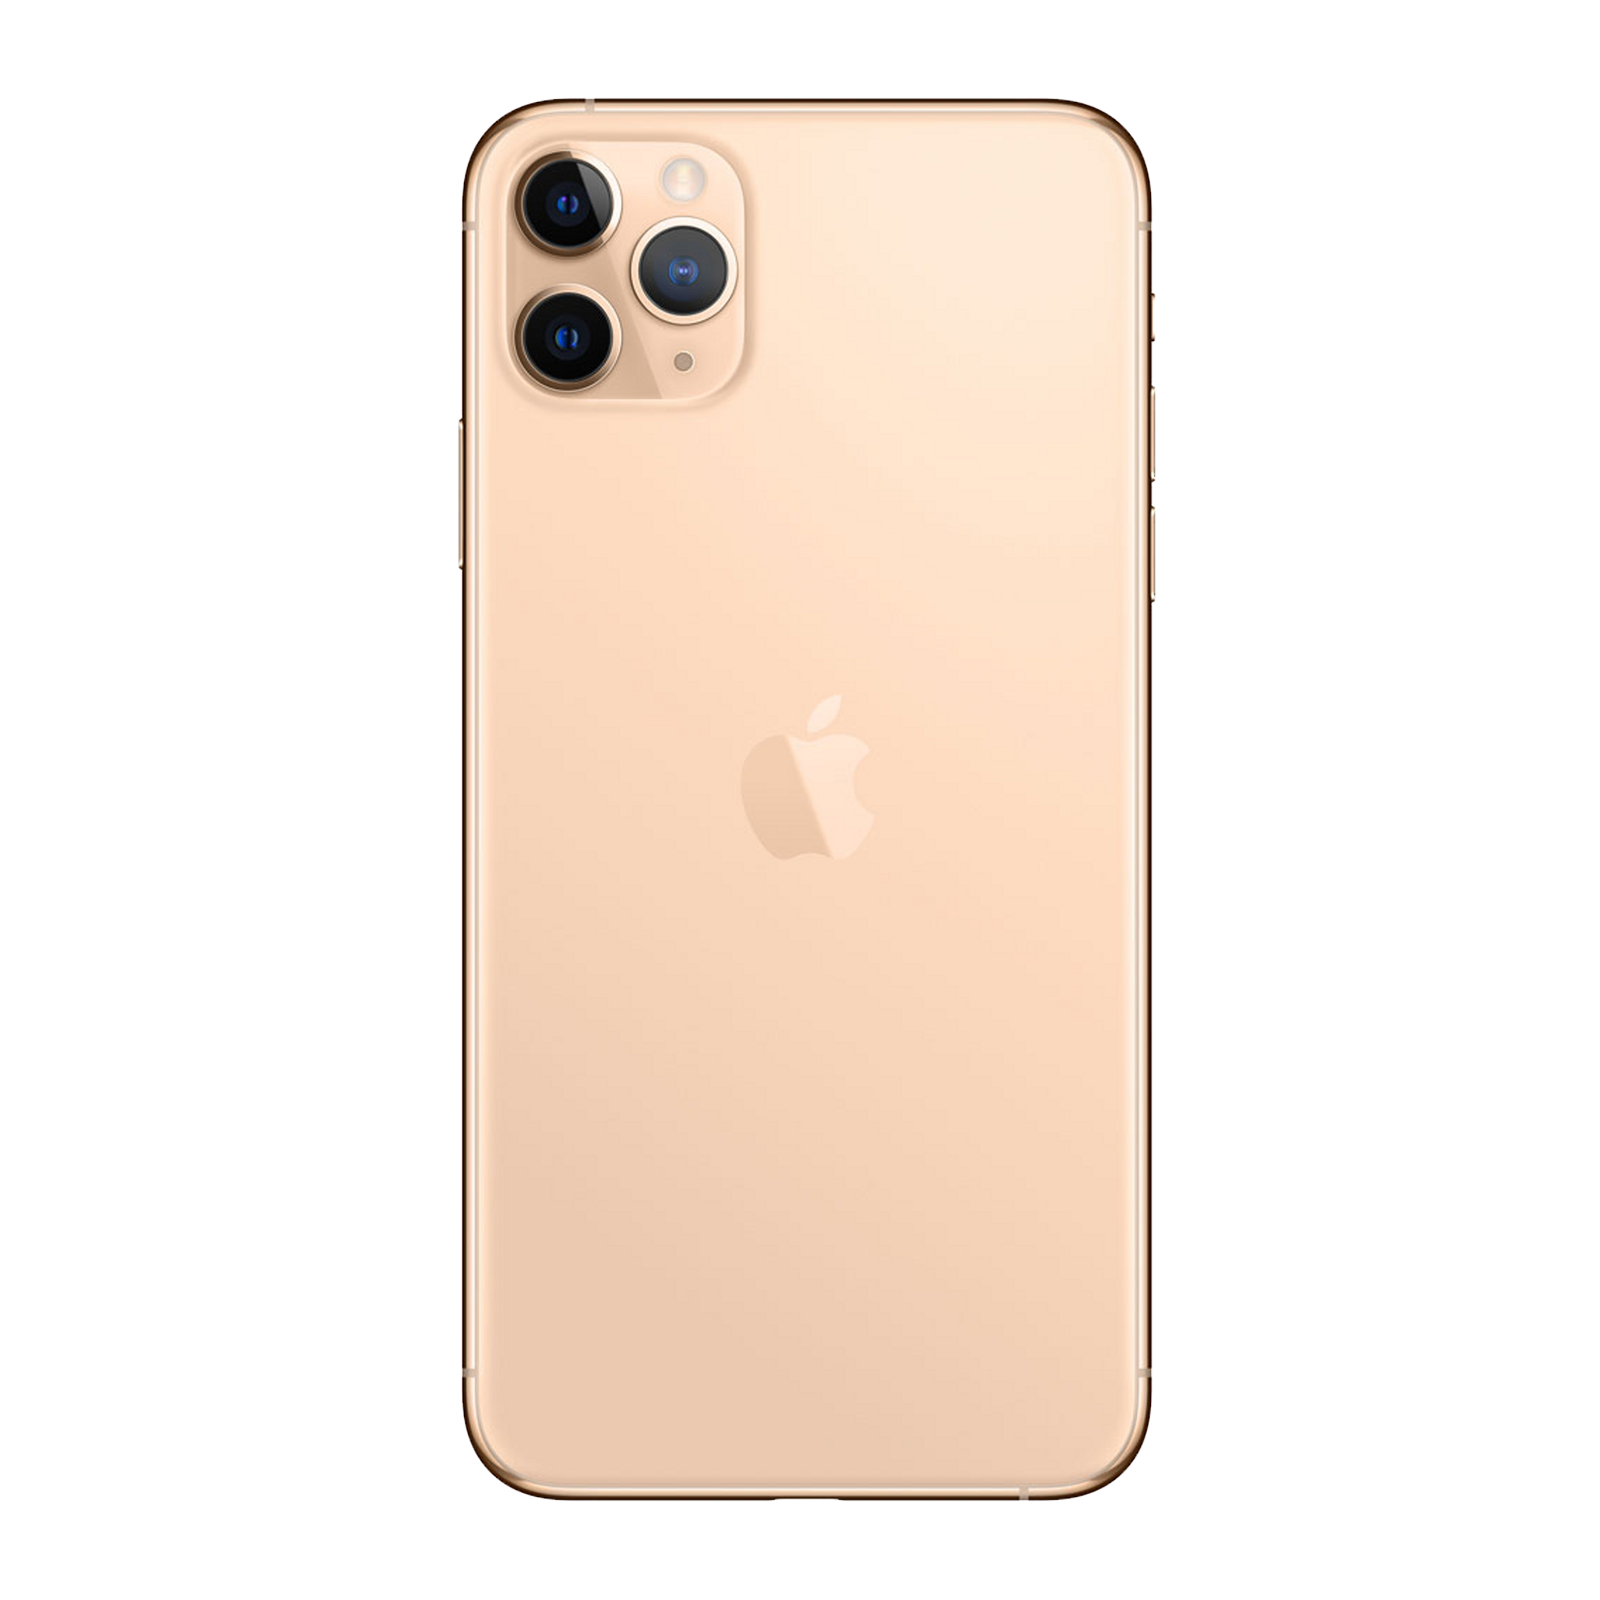 Apple iPhone 11 Pro Max 512GB Gold Good - Sprint